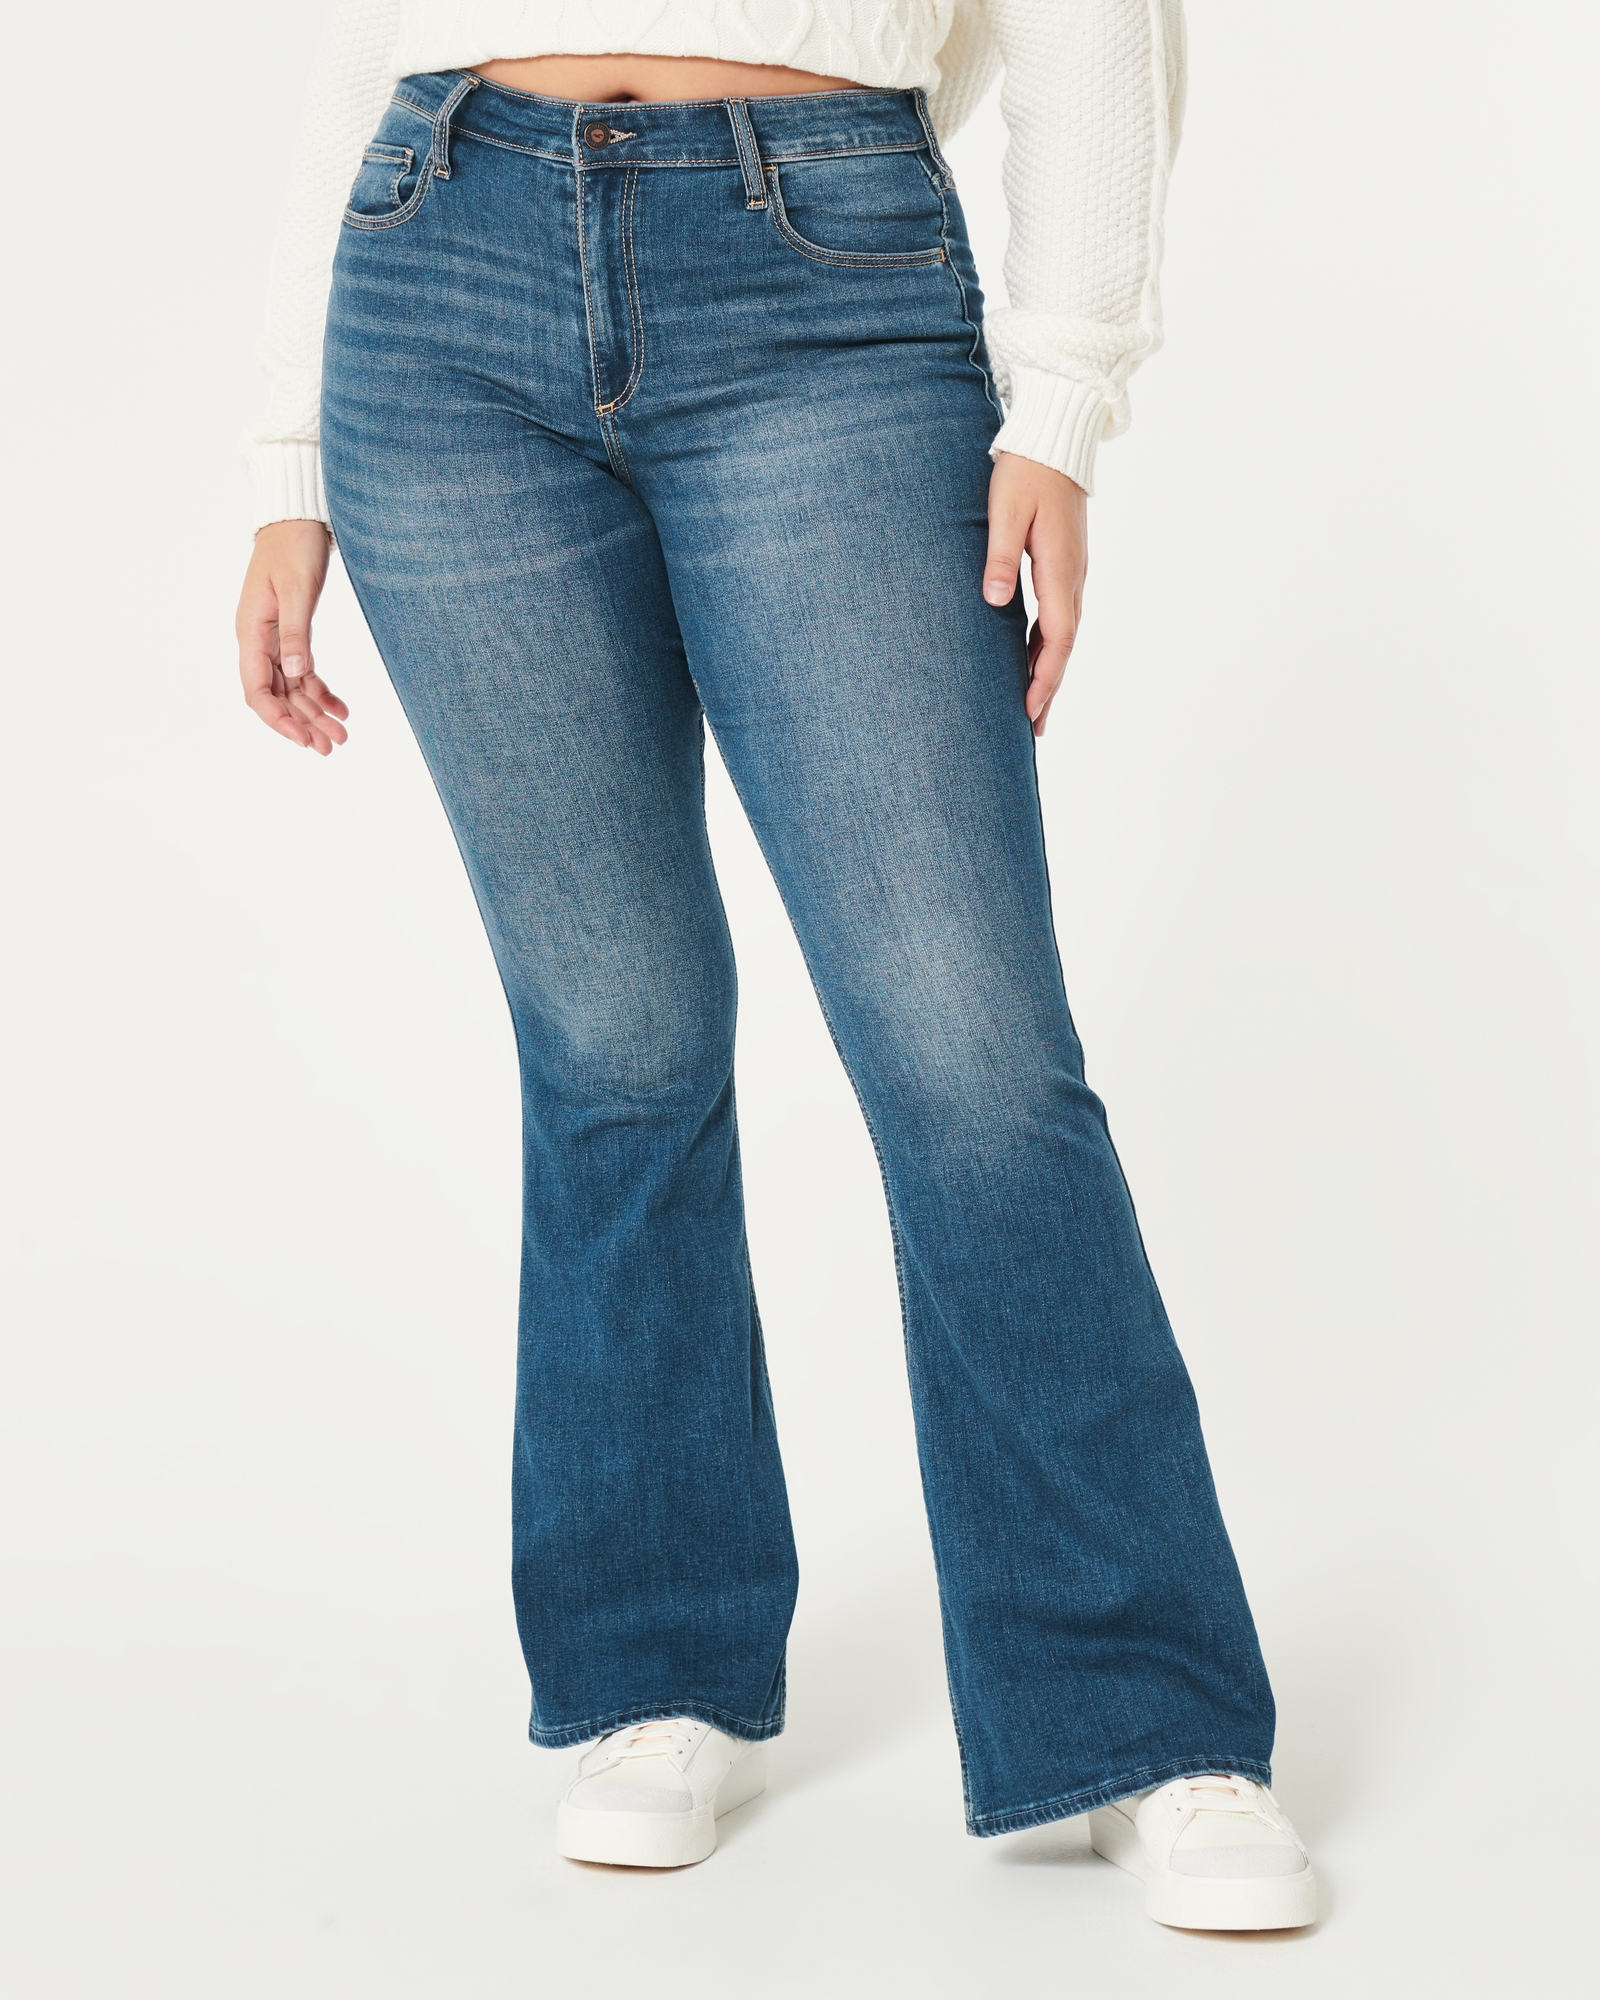 Hollister Flare Jeans Dark Wash Size 0 - $21 - From Jillian